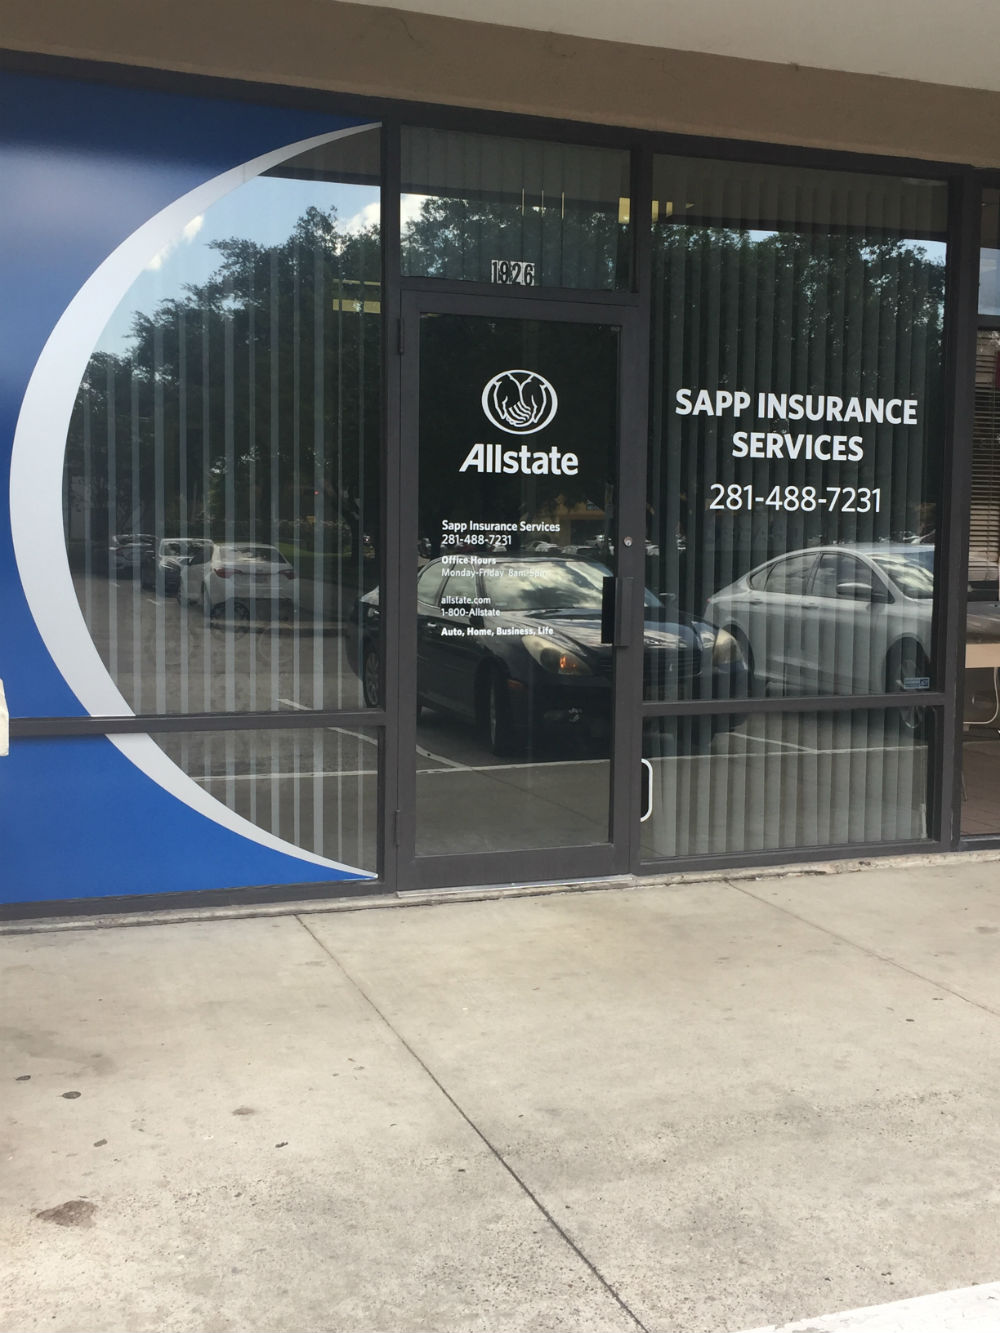 Joseph Sapp Allstate Insurance